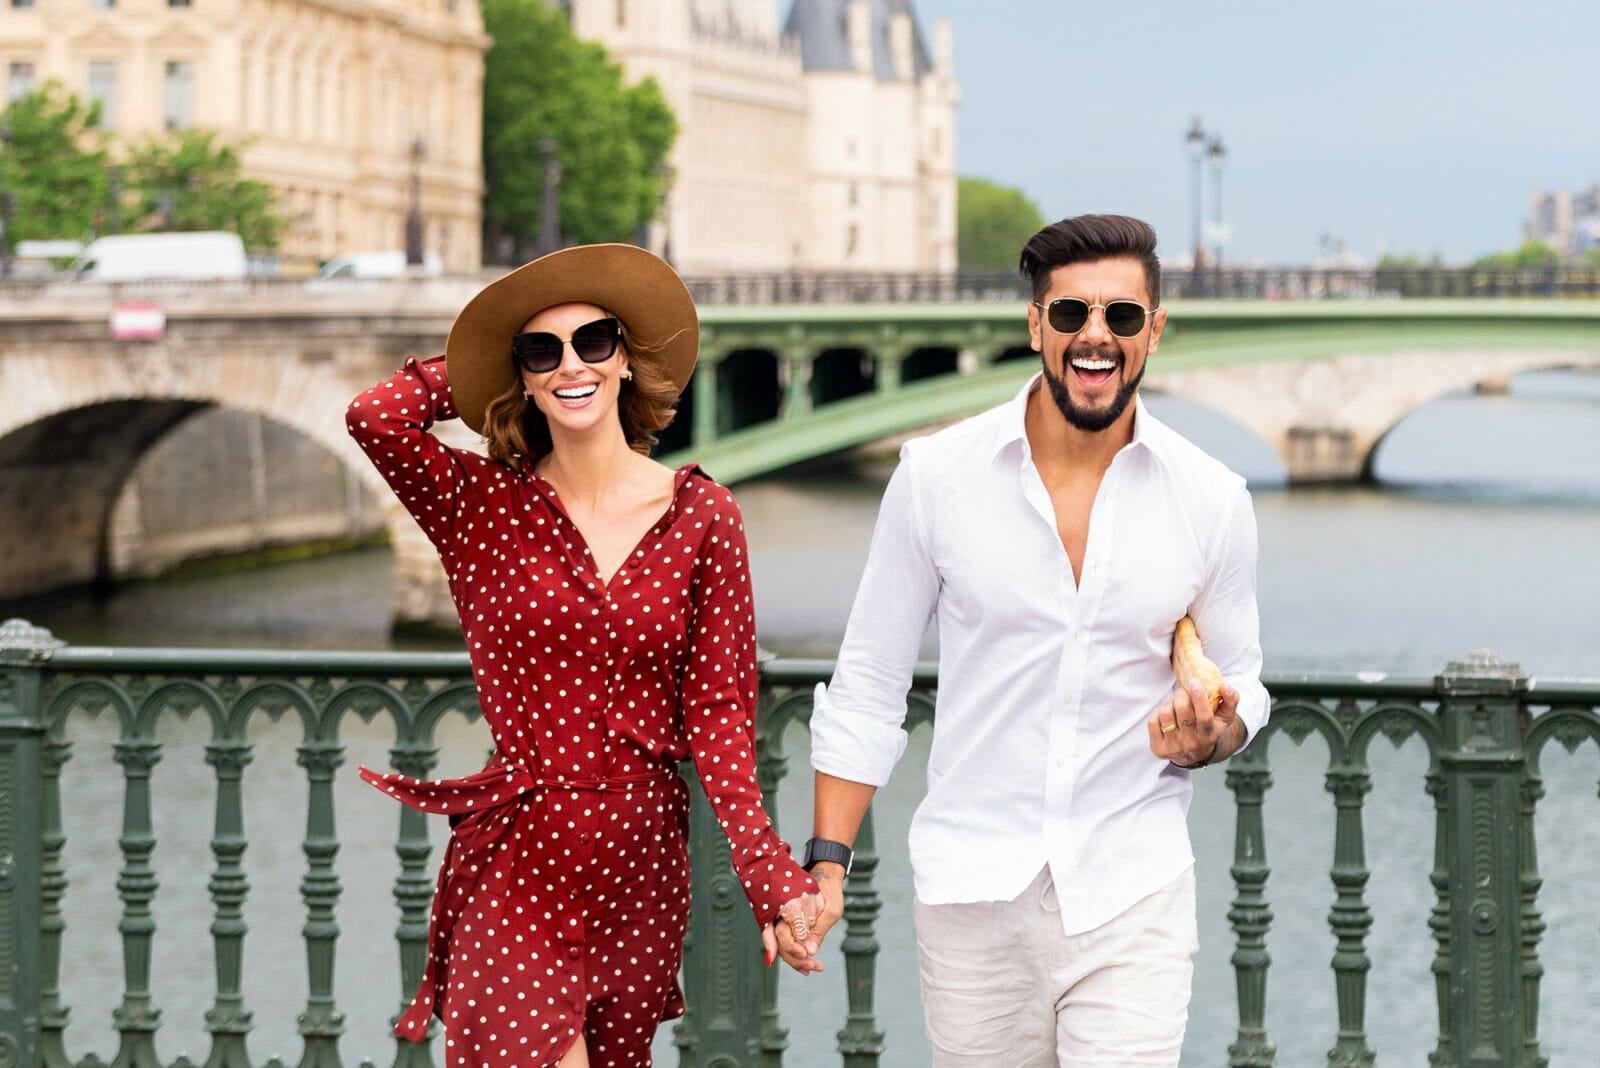 Fun couple photoshoot in Paris near Notre Dame